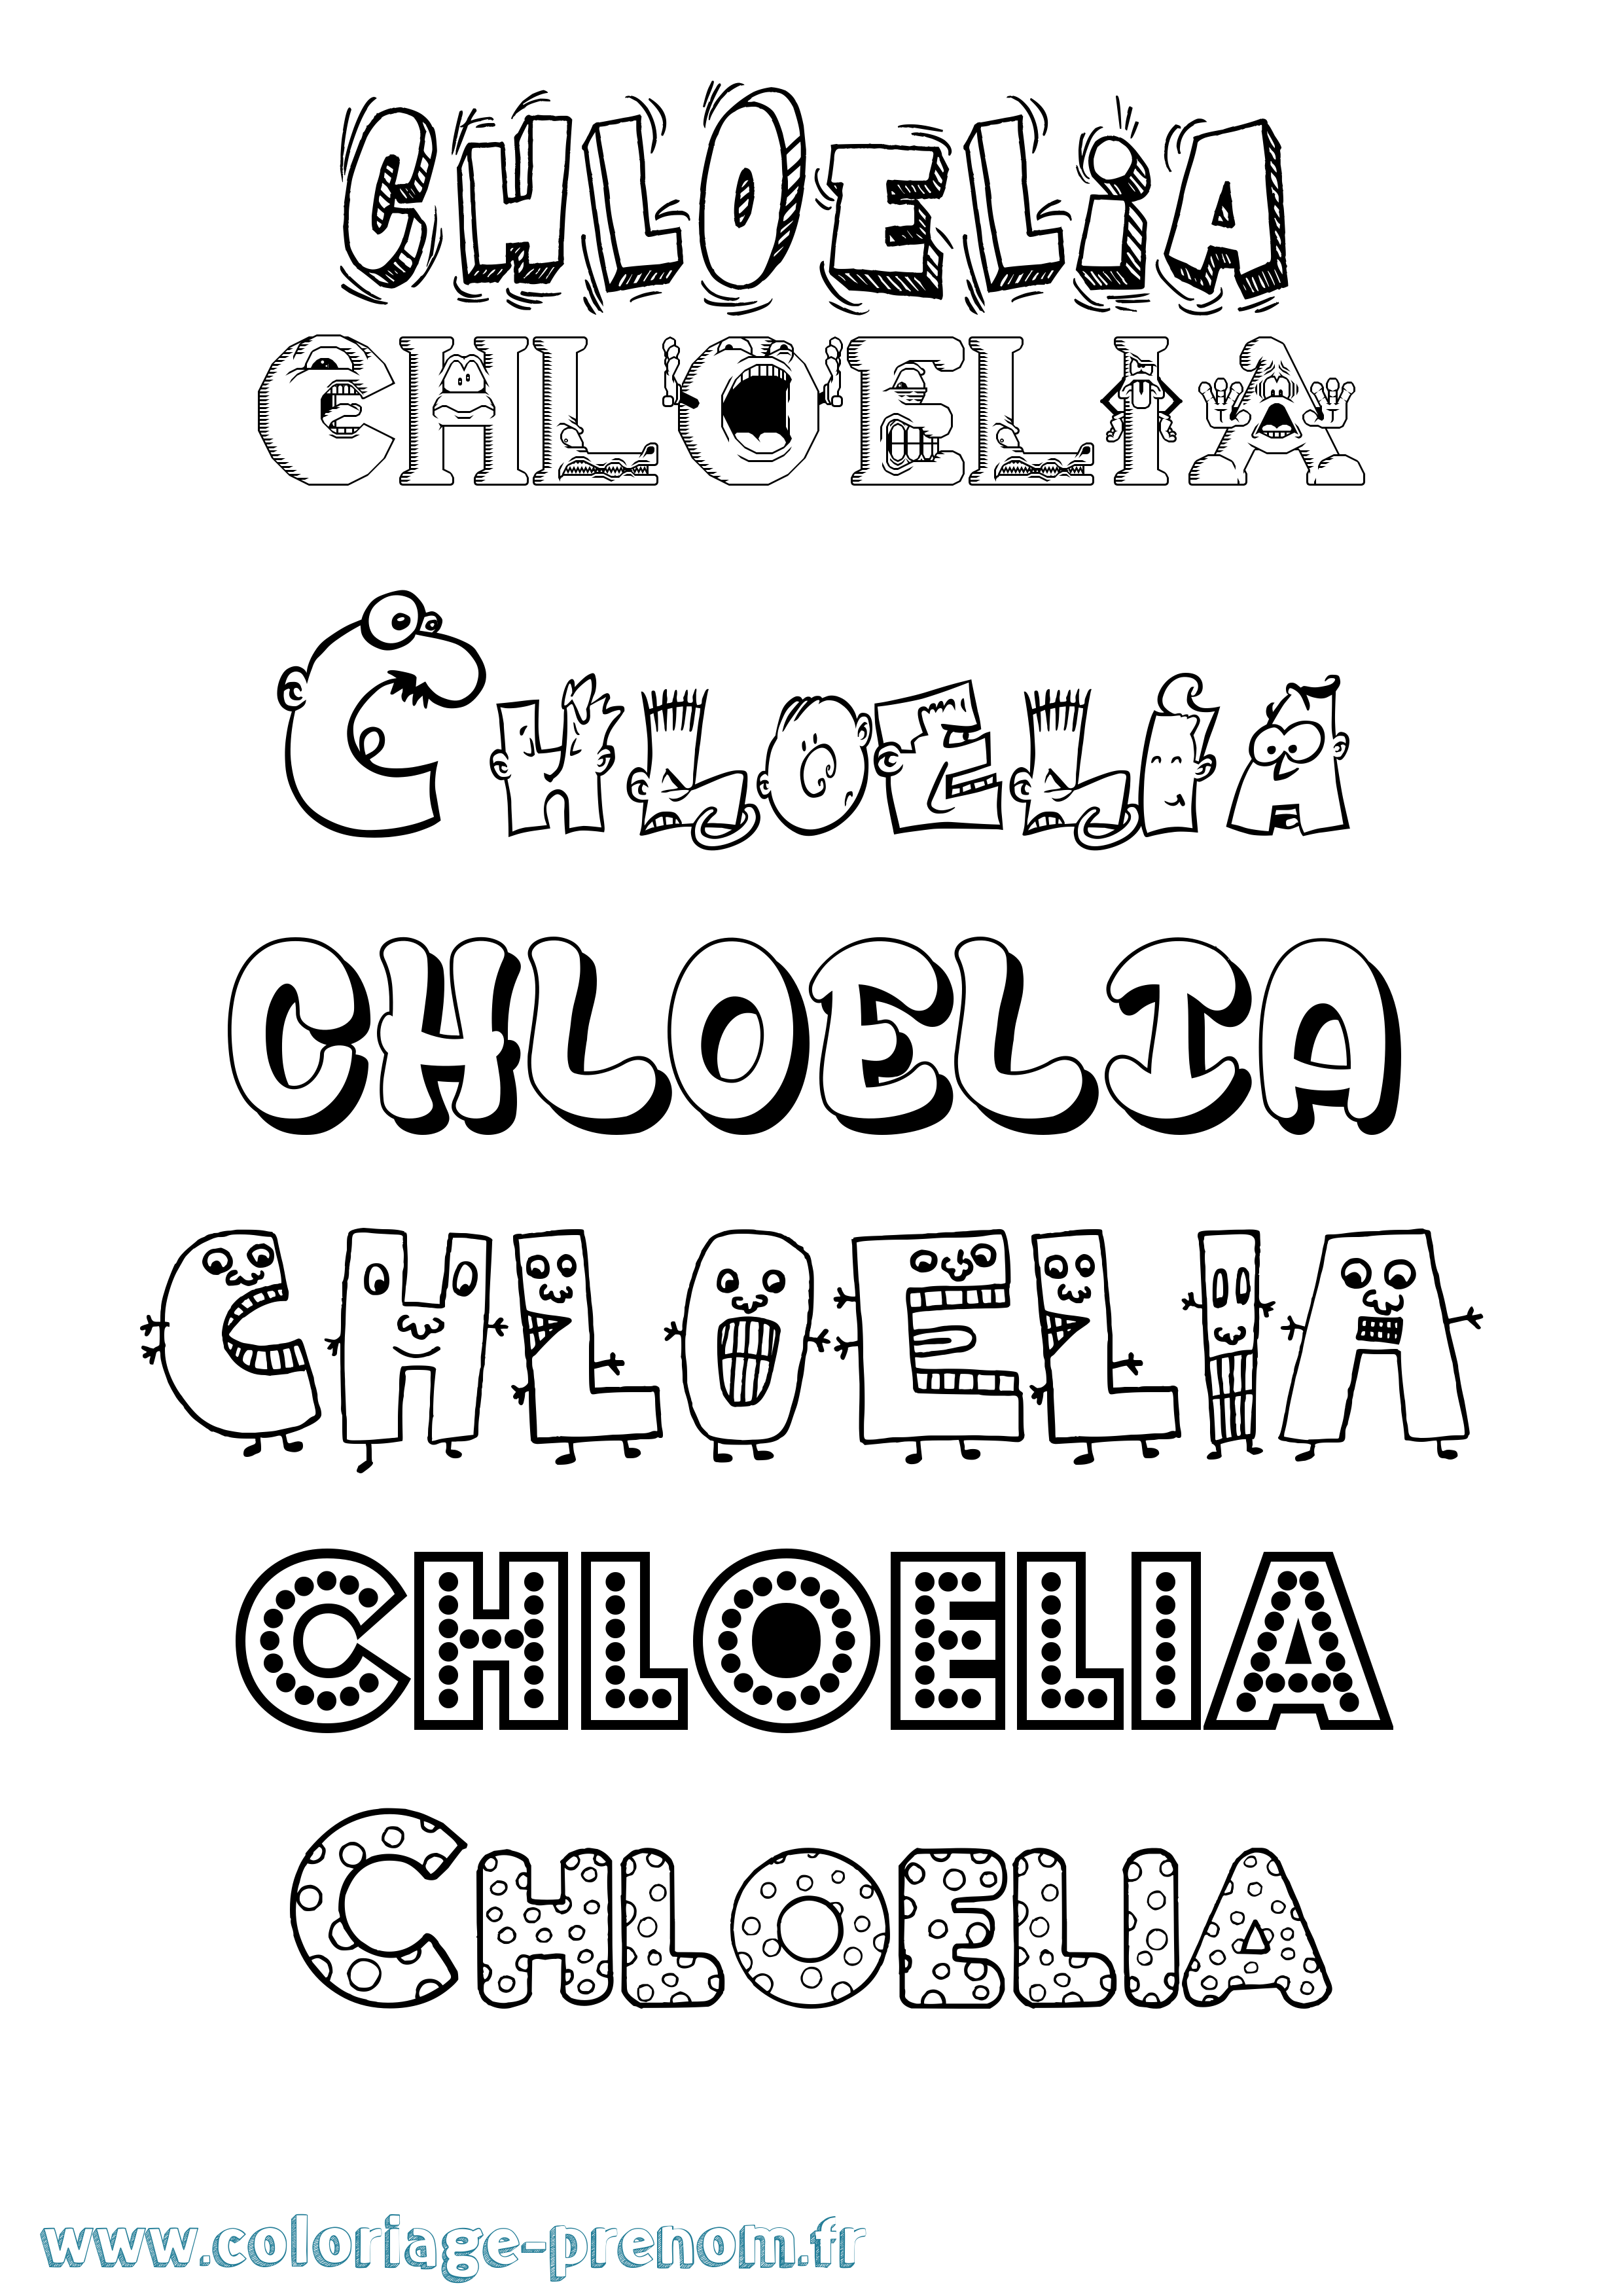 Coloriage prénom Chloelia Fun